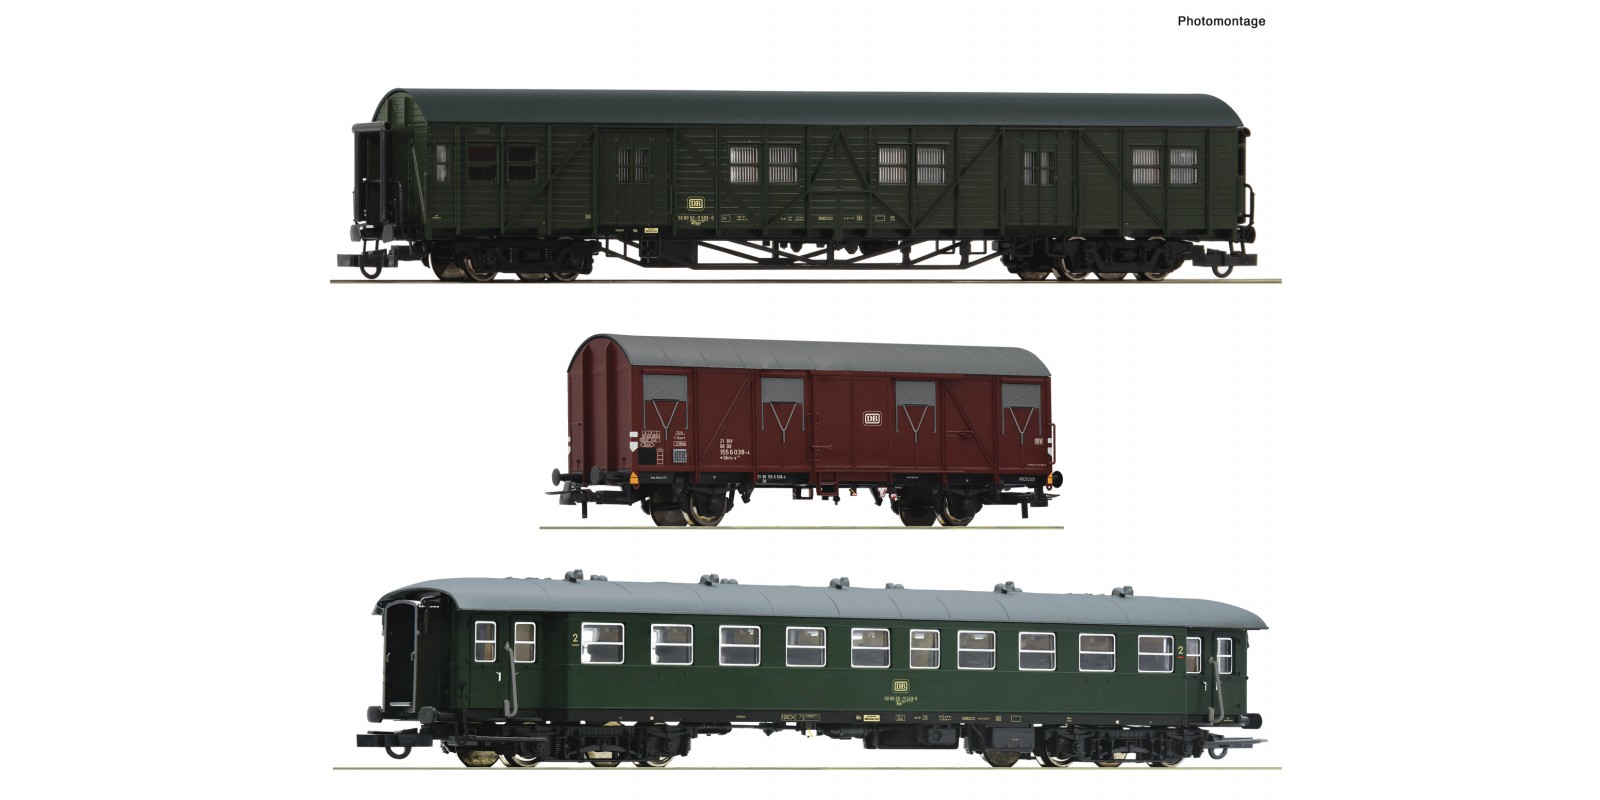 RO74010 3-piece set 1: “Personenzug Freilassing” (Passenger train Freilassing), DB